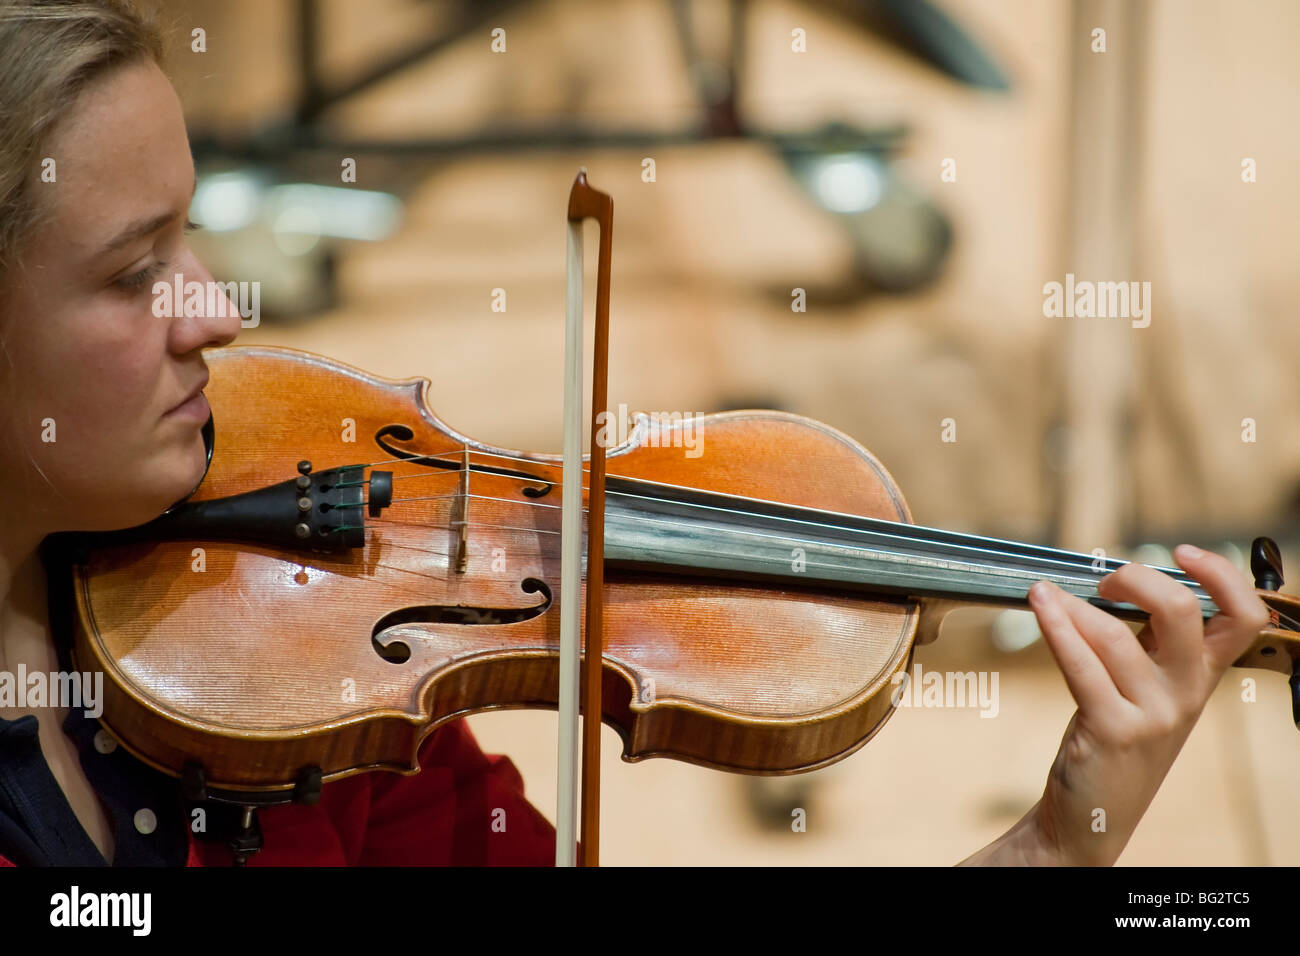 Violinist Stock Photo